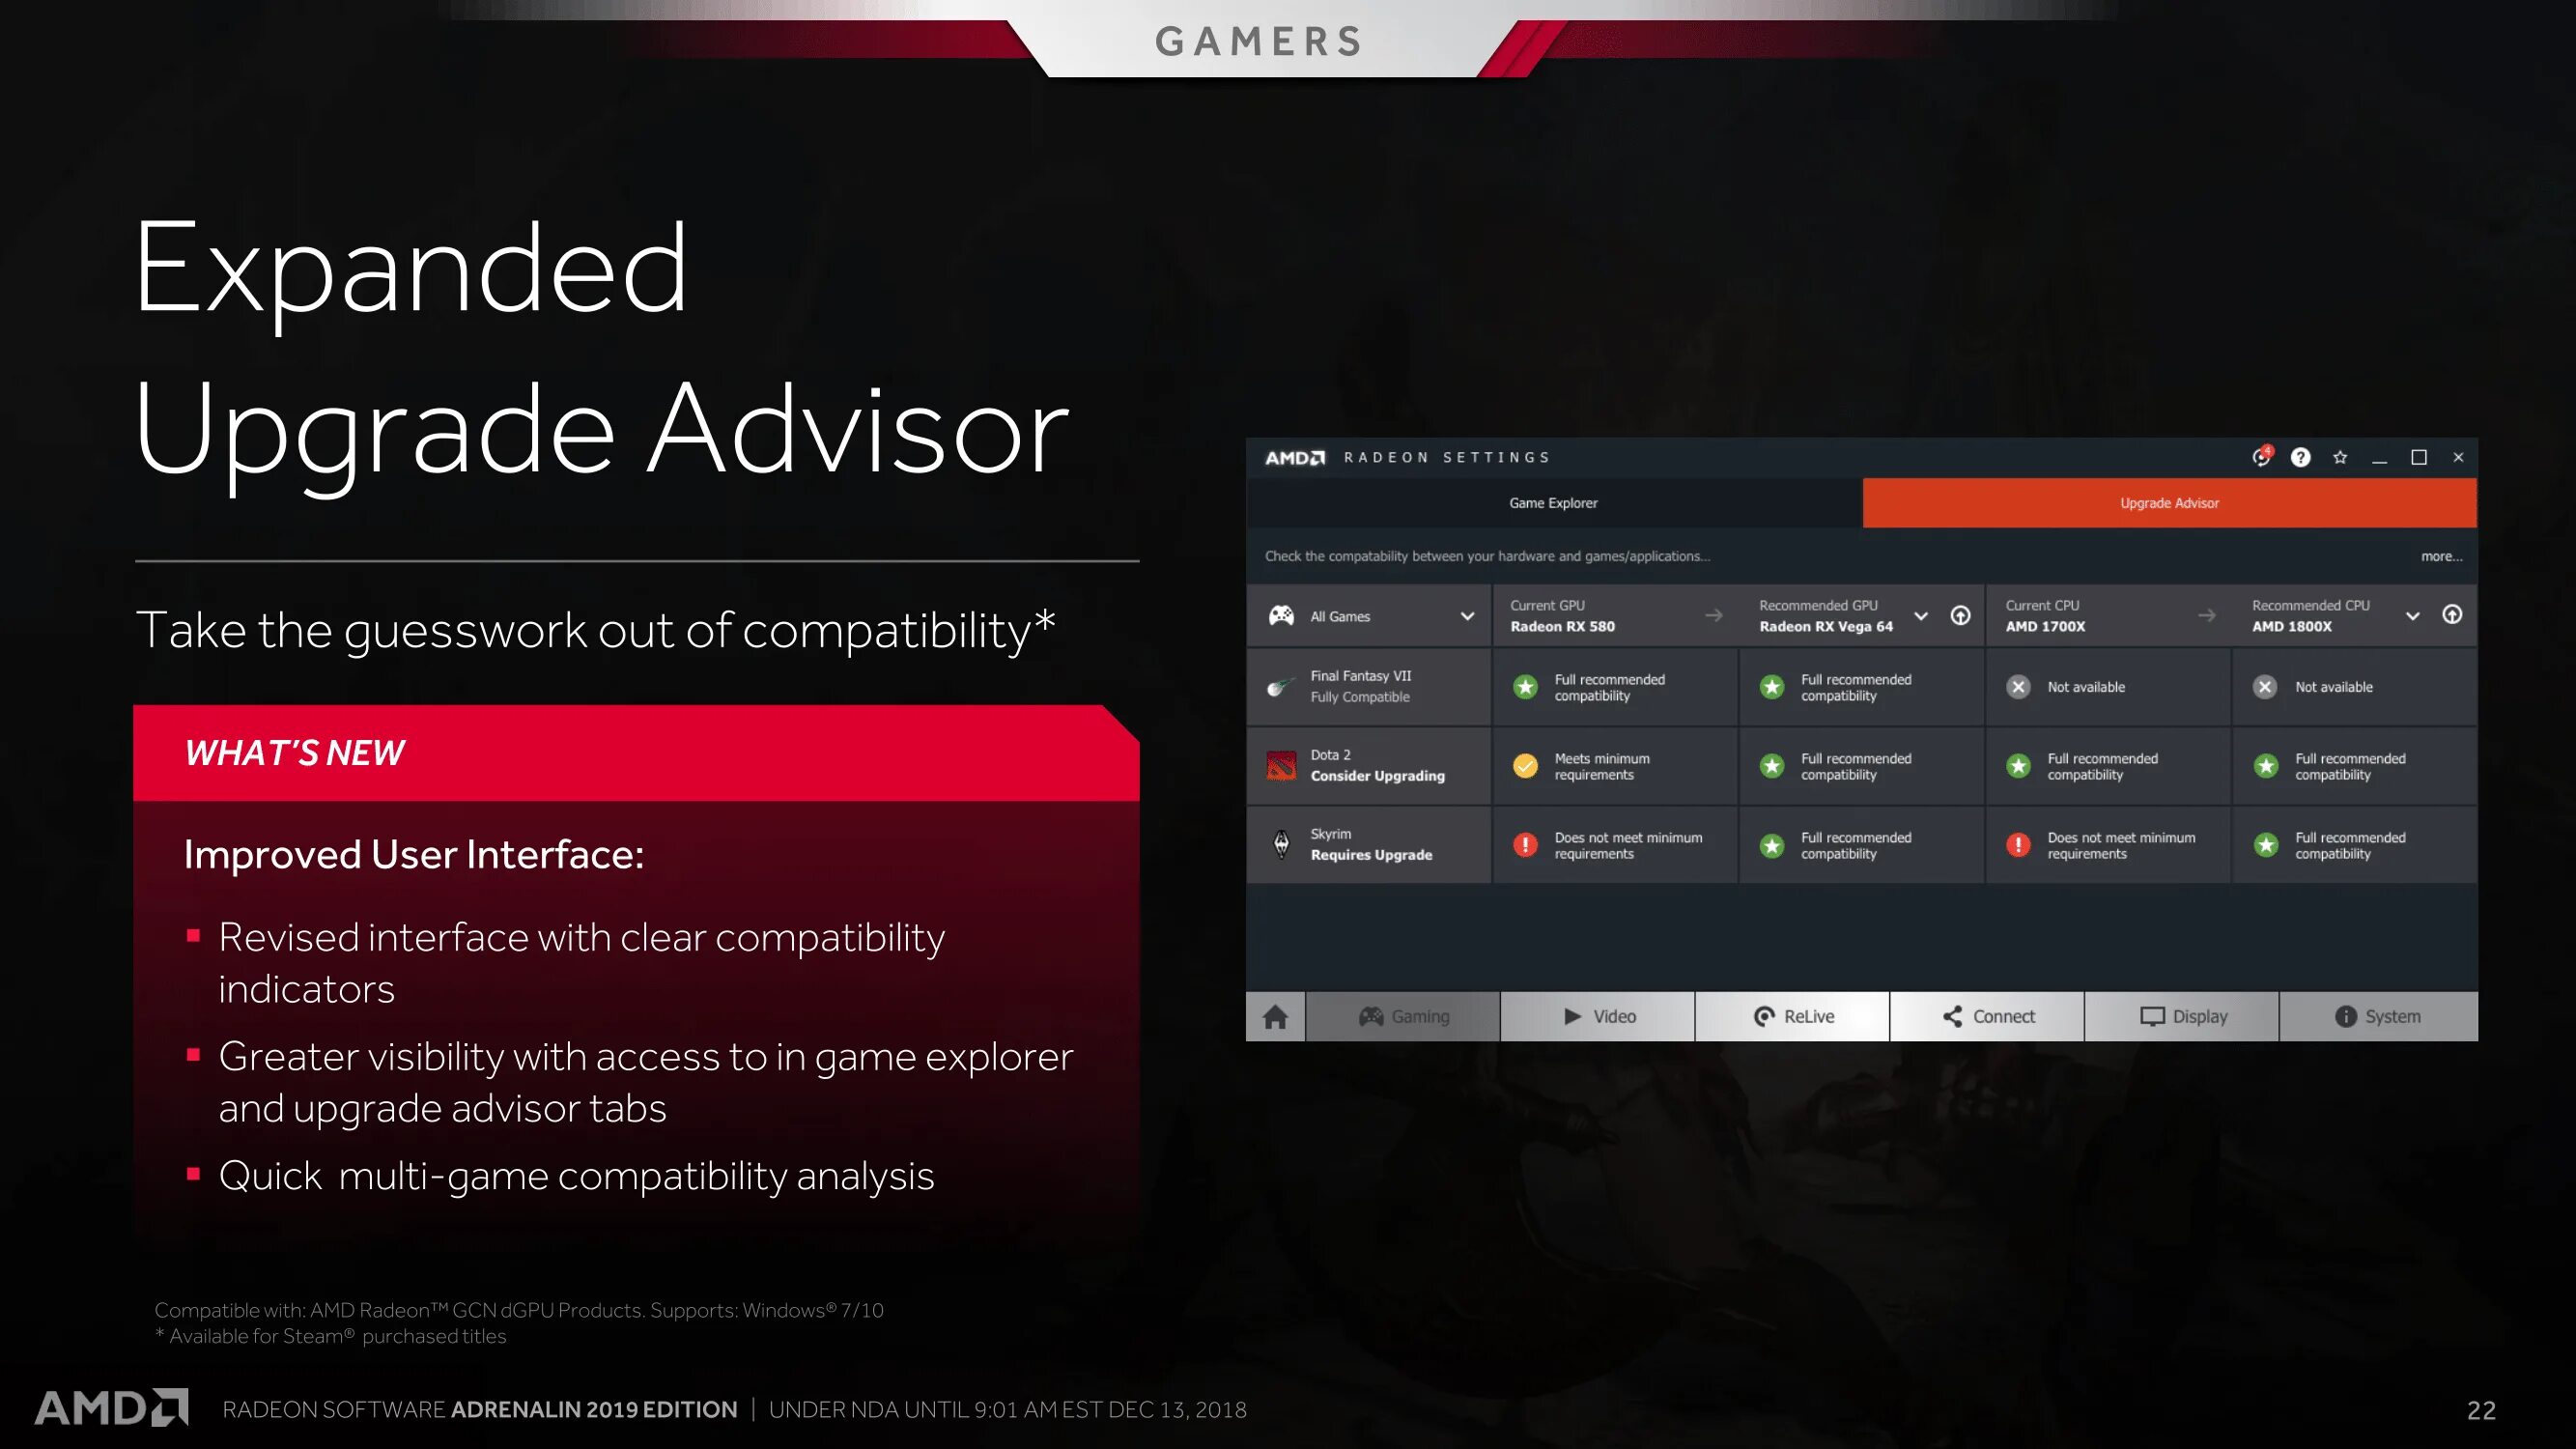 AMD Radeon Adrenalin. Radeon software Adrenalin. AMD Radeon Advisors. AMD Adrenalin Edition display. Amd software adrenalin edition 24.3 1